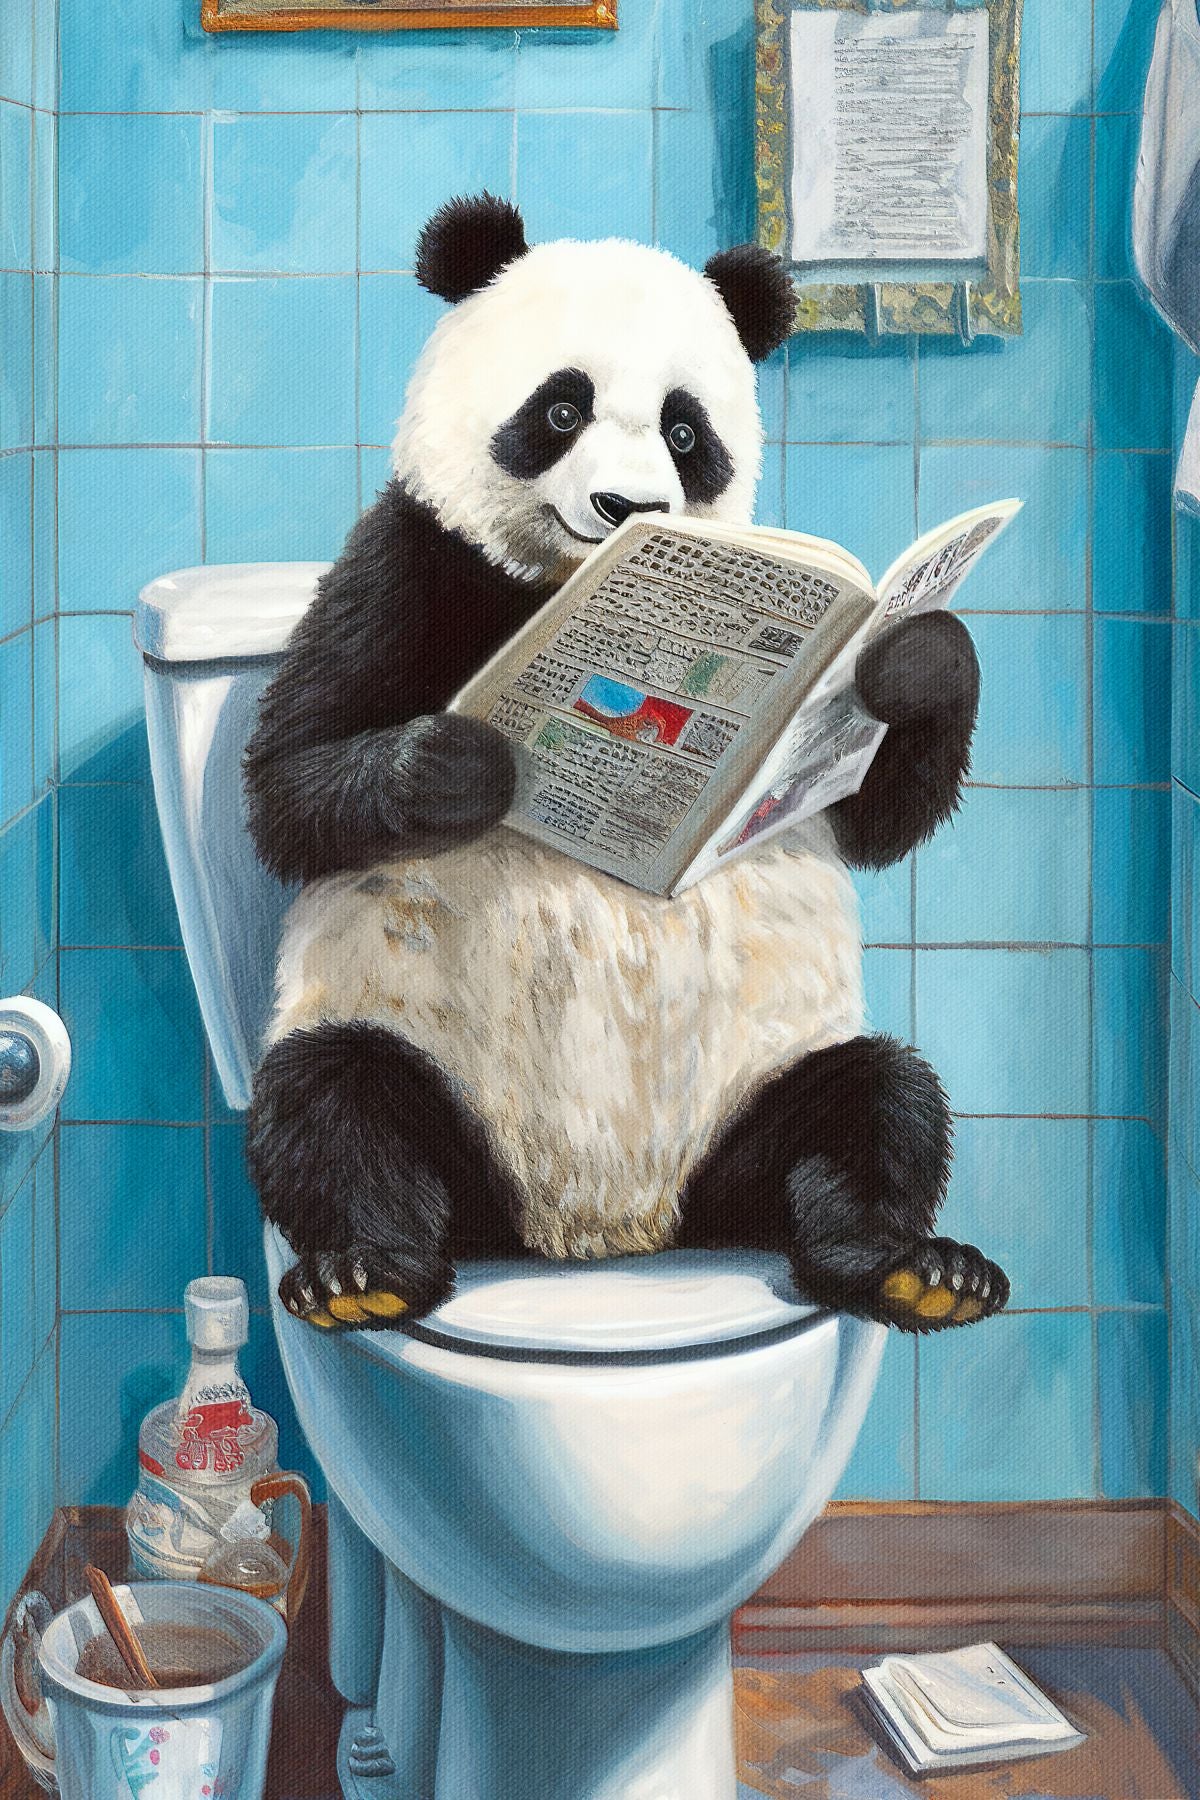 Panda On A Toilet